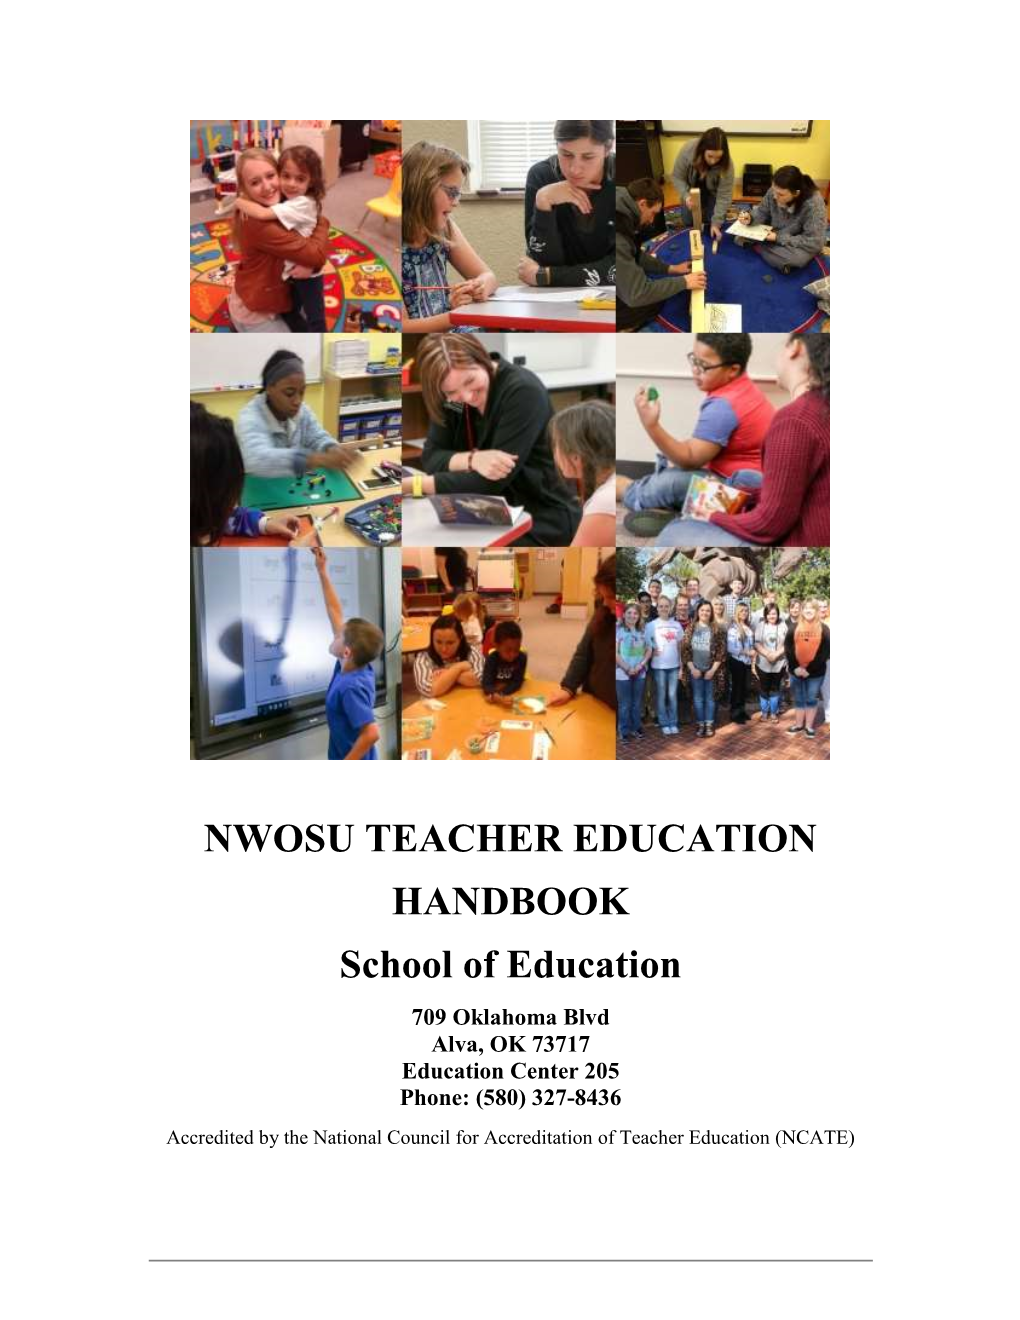 NWOSU TEACHER EDUCATION HANDBOOK School of Education